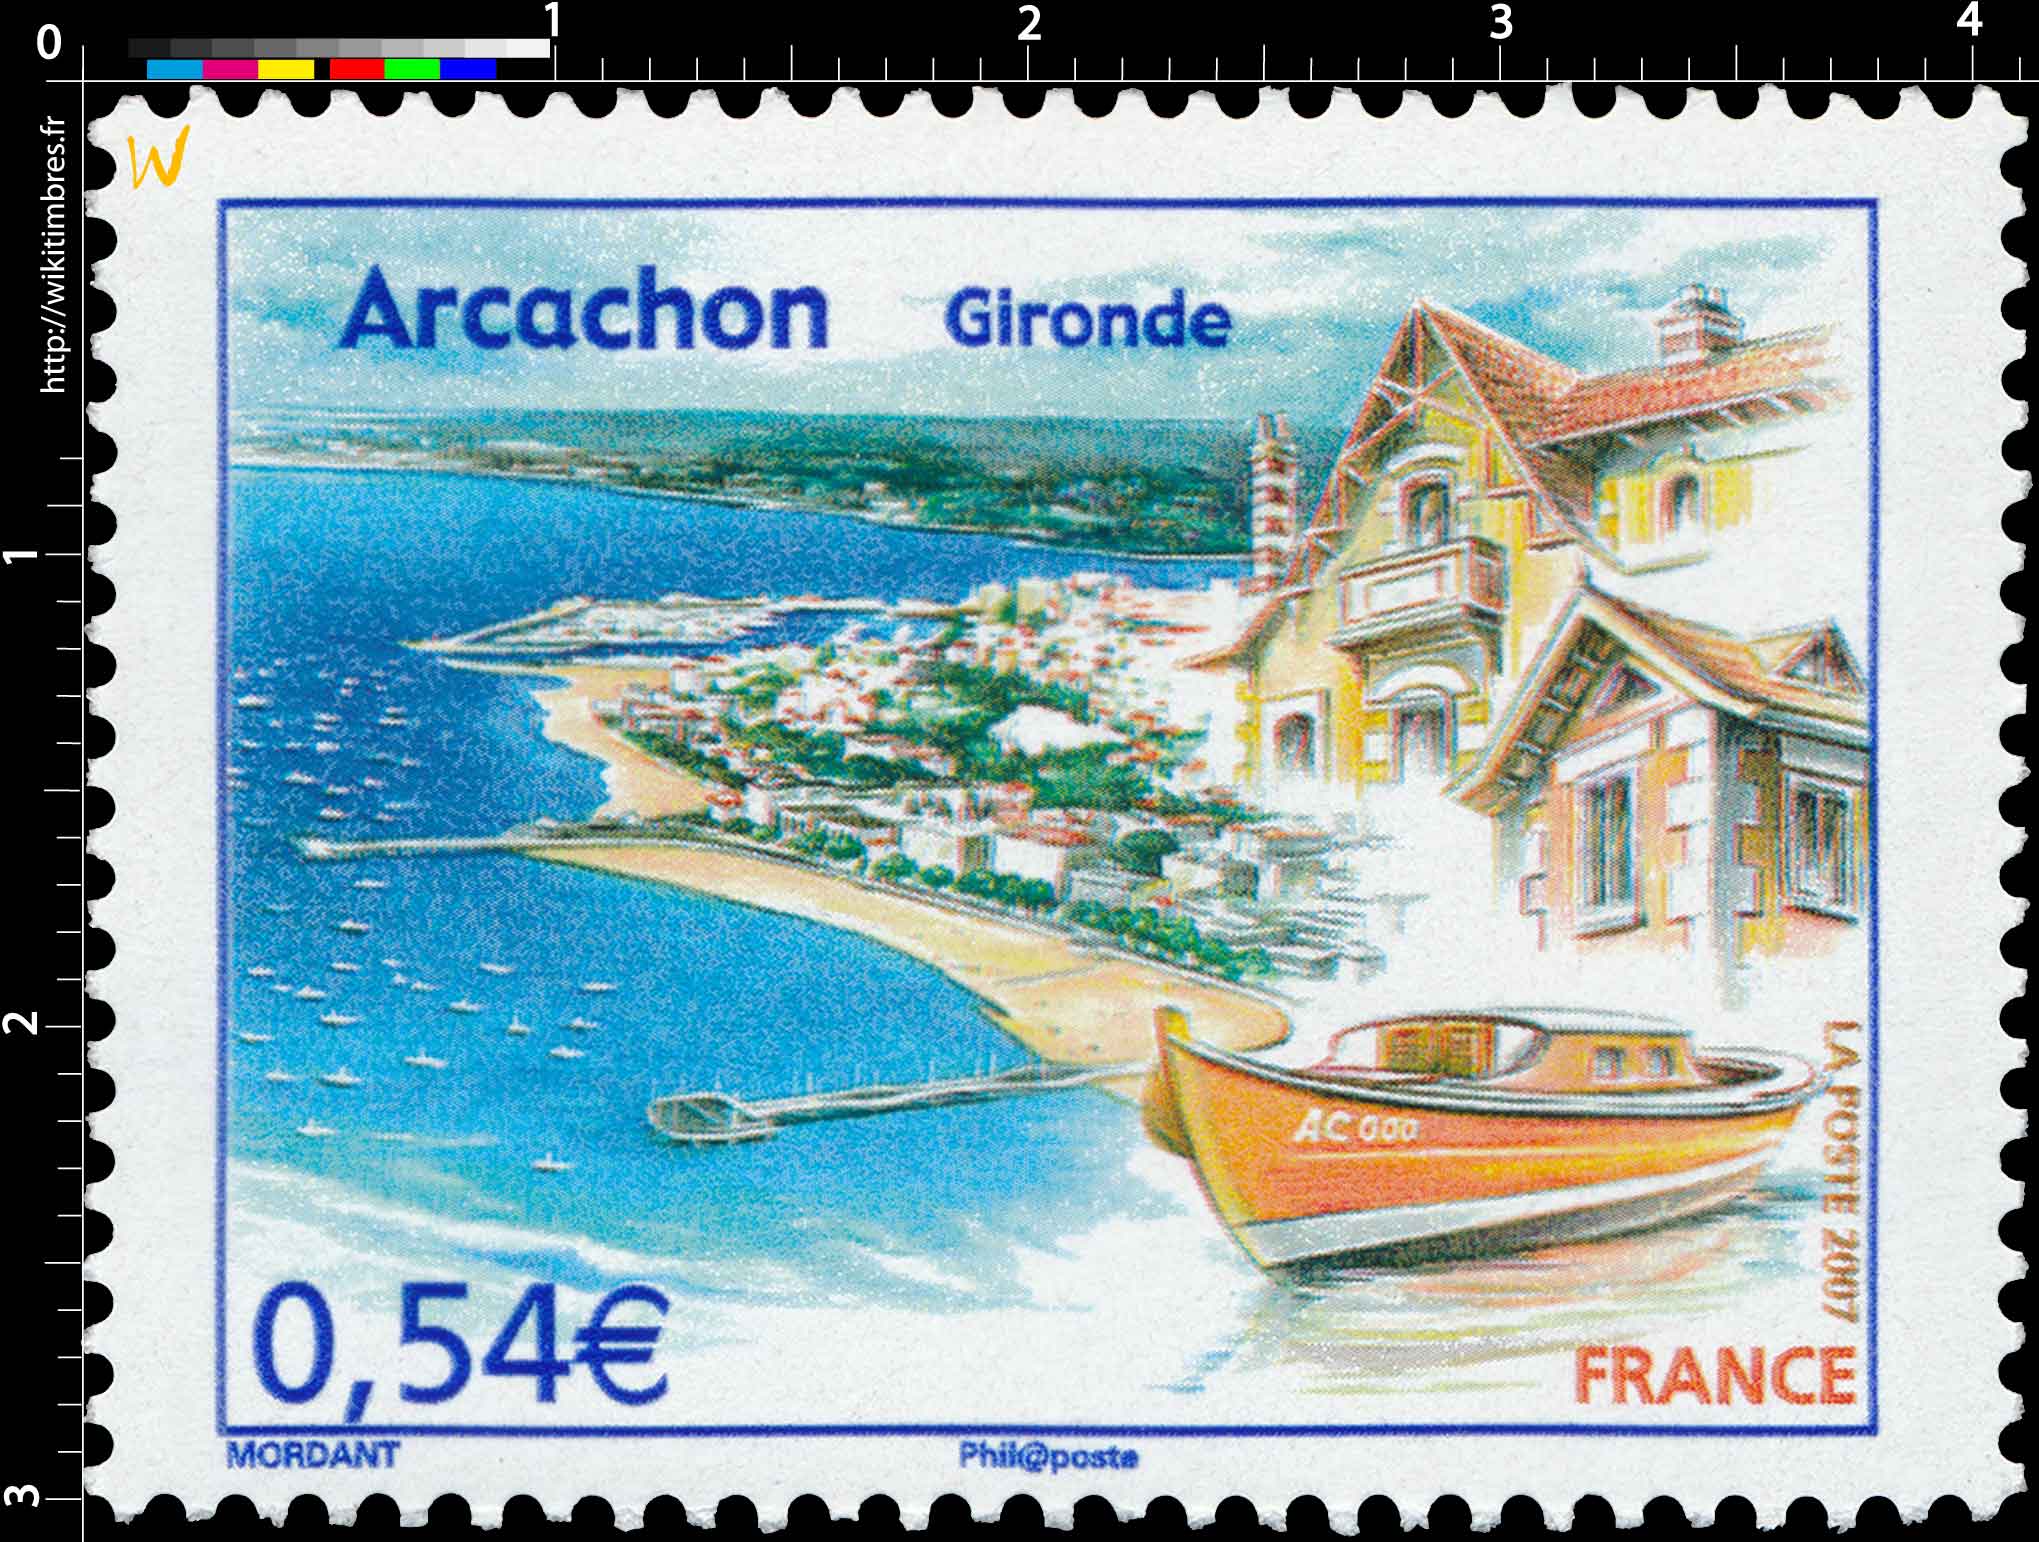 2007 Arcachon Gironde